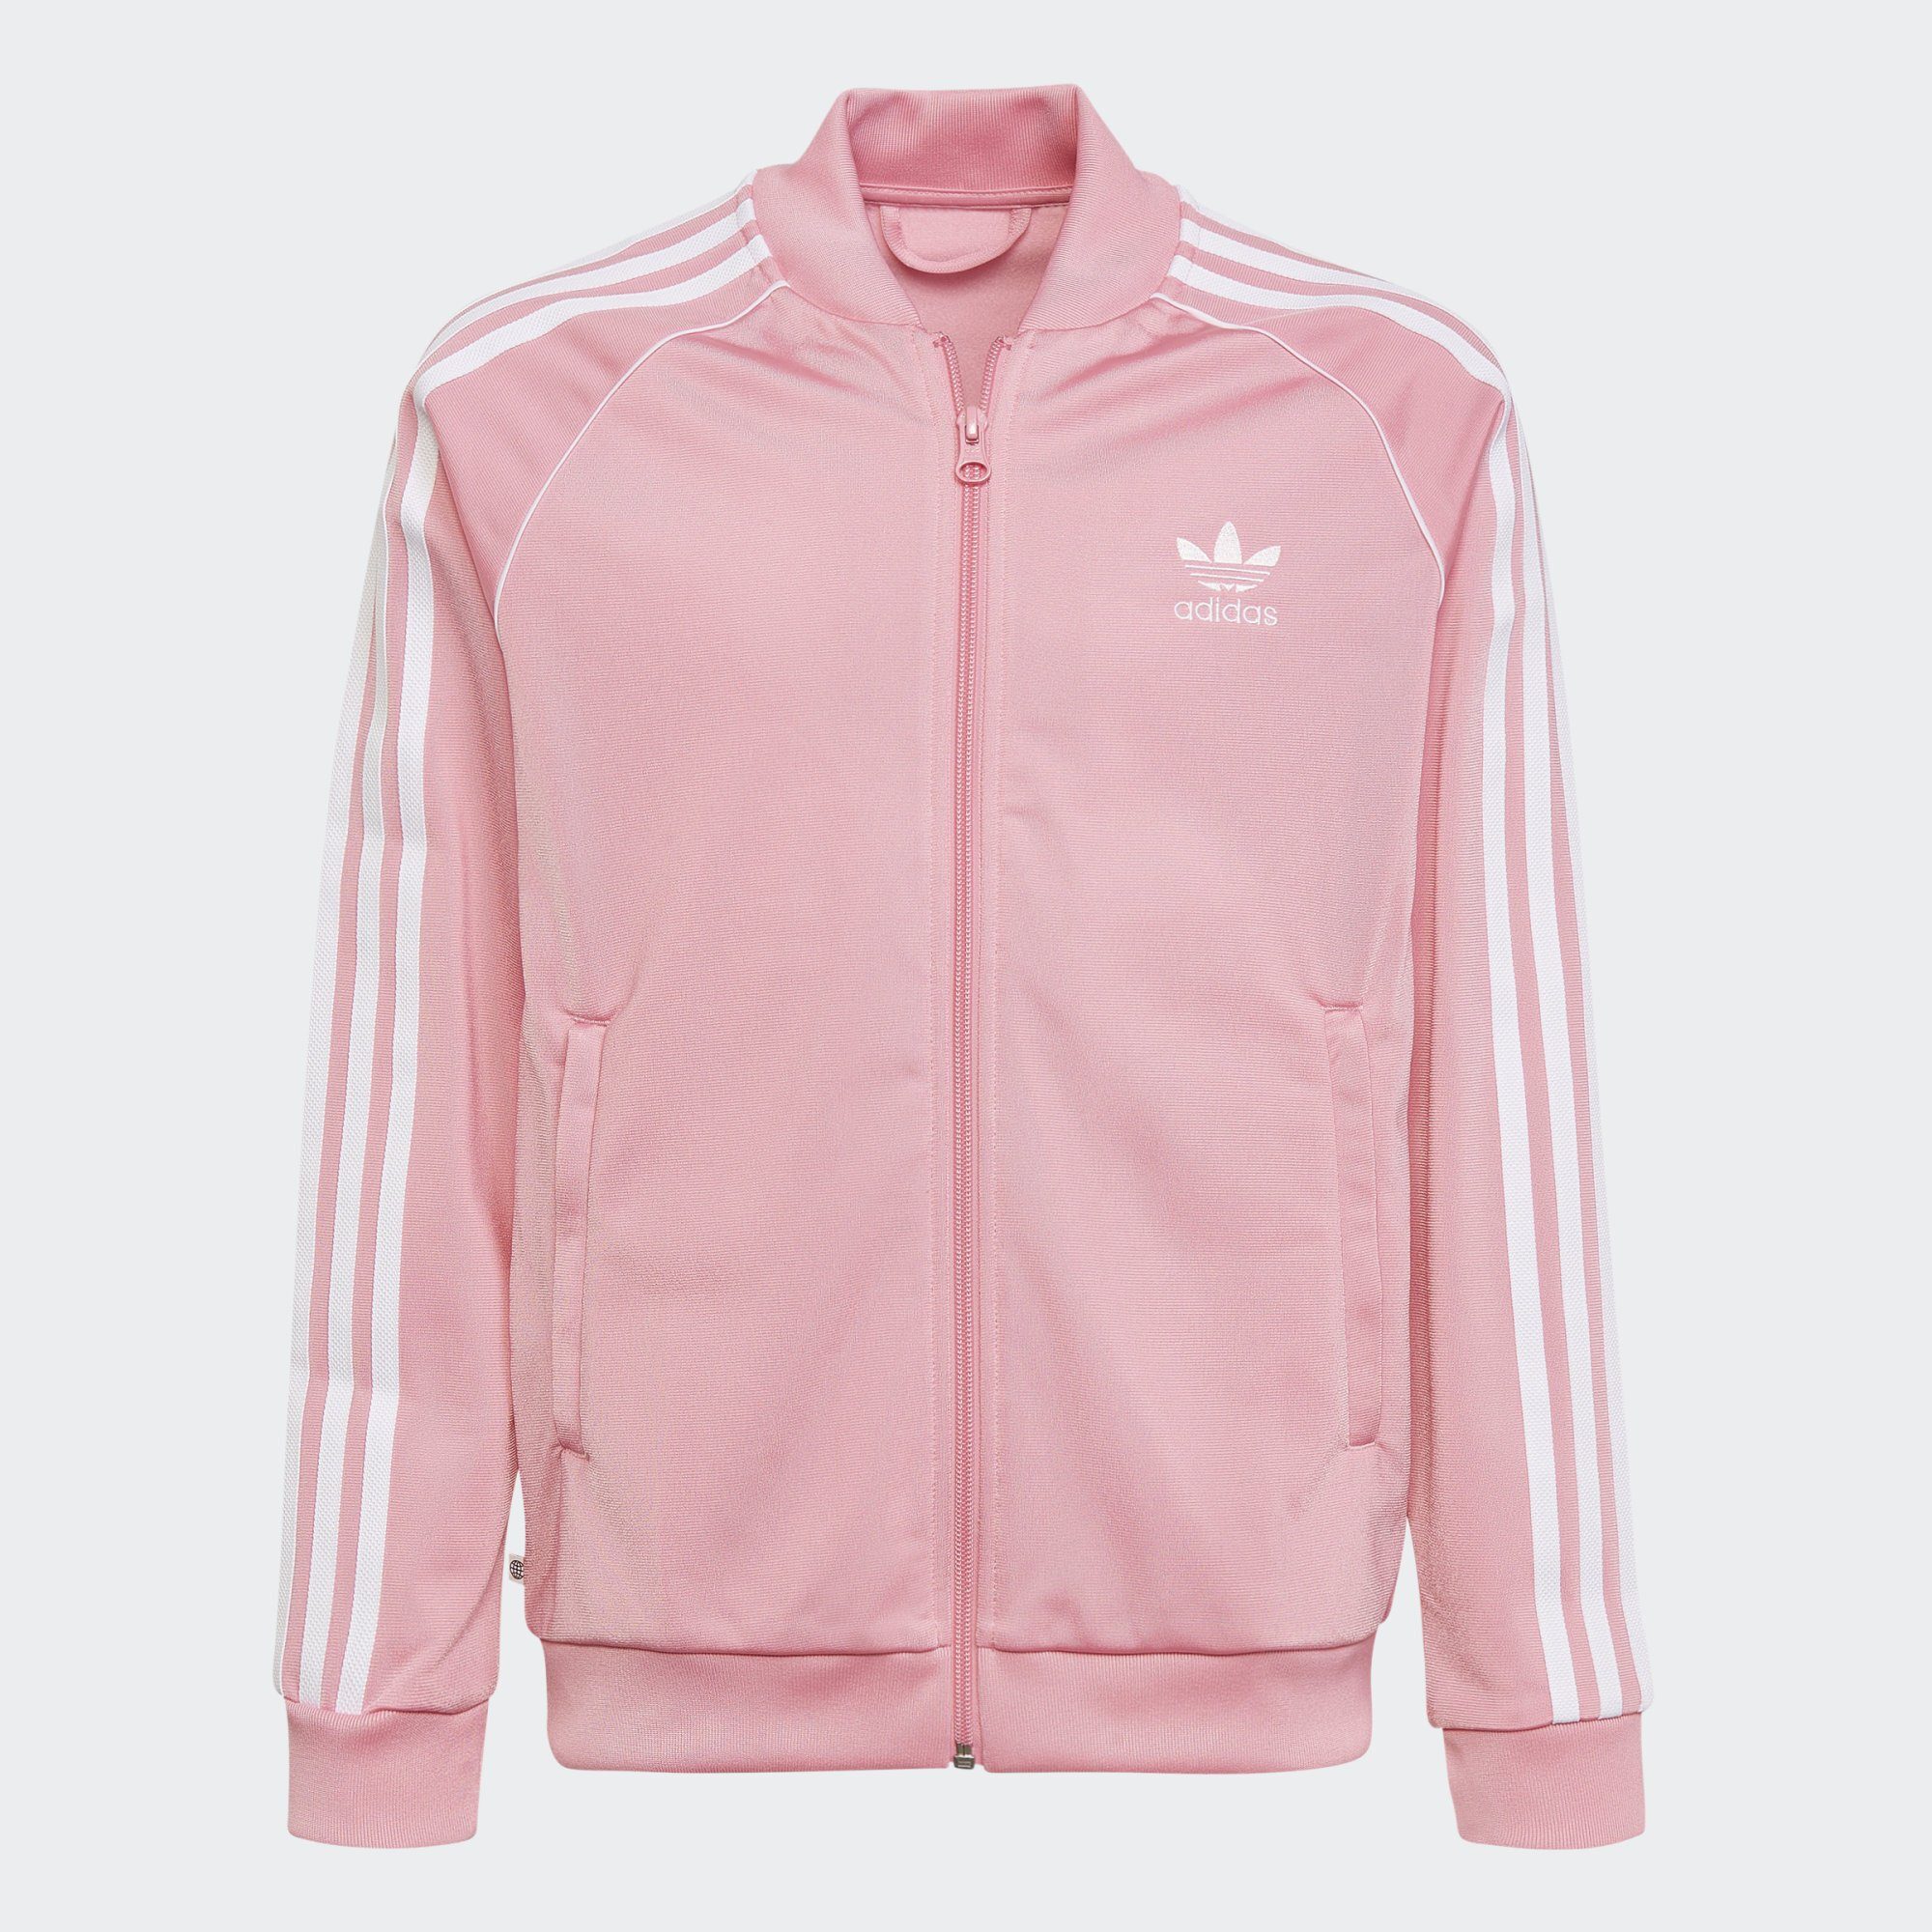 SST Bliss Pink Originals adidas ORIGINALS ADICOLOR JACKE Trainingsjacke